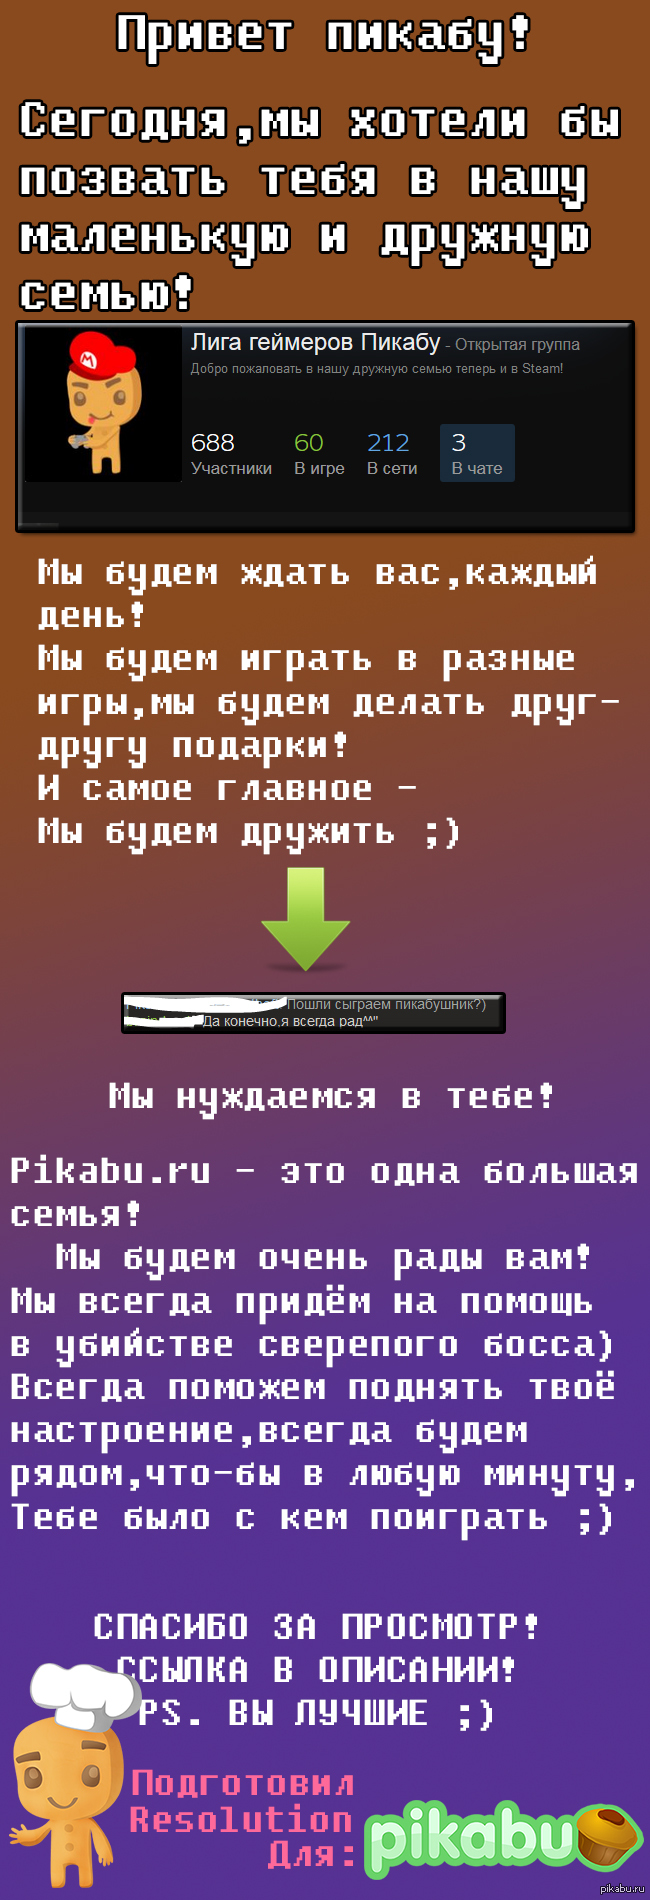  Pikabu.ru  Steam ;)    ;)   : http://steamcommunity.com/groups/leagueofpikabu  ps.    ;)  :